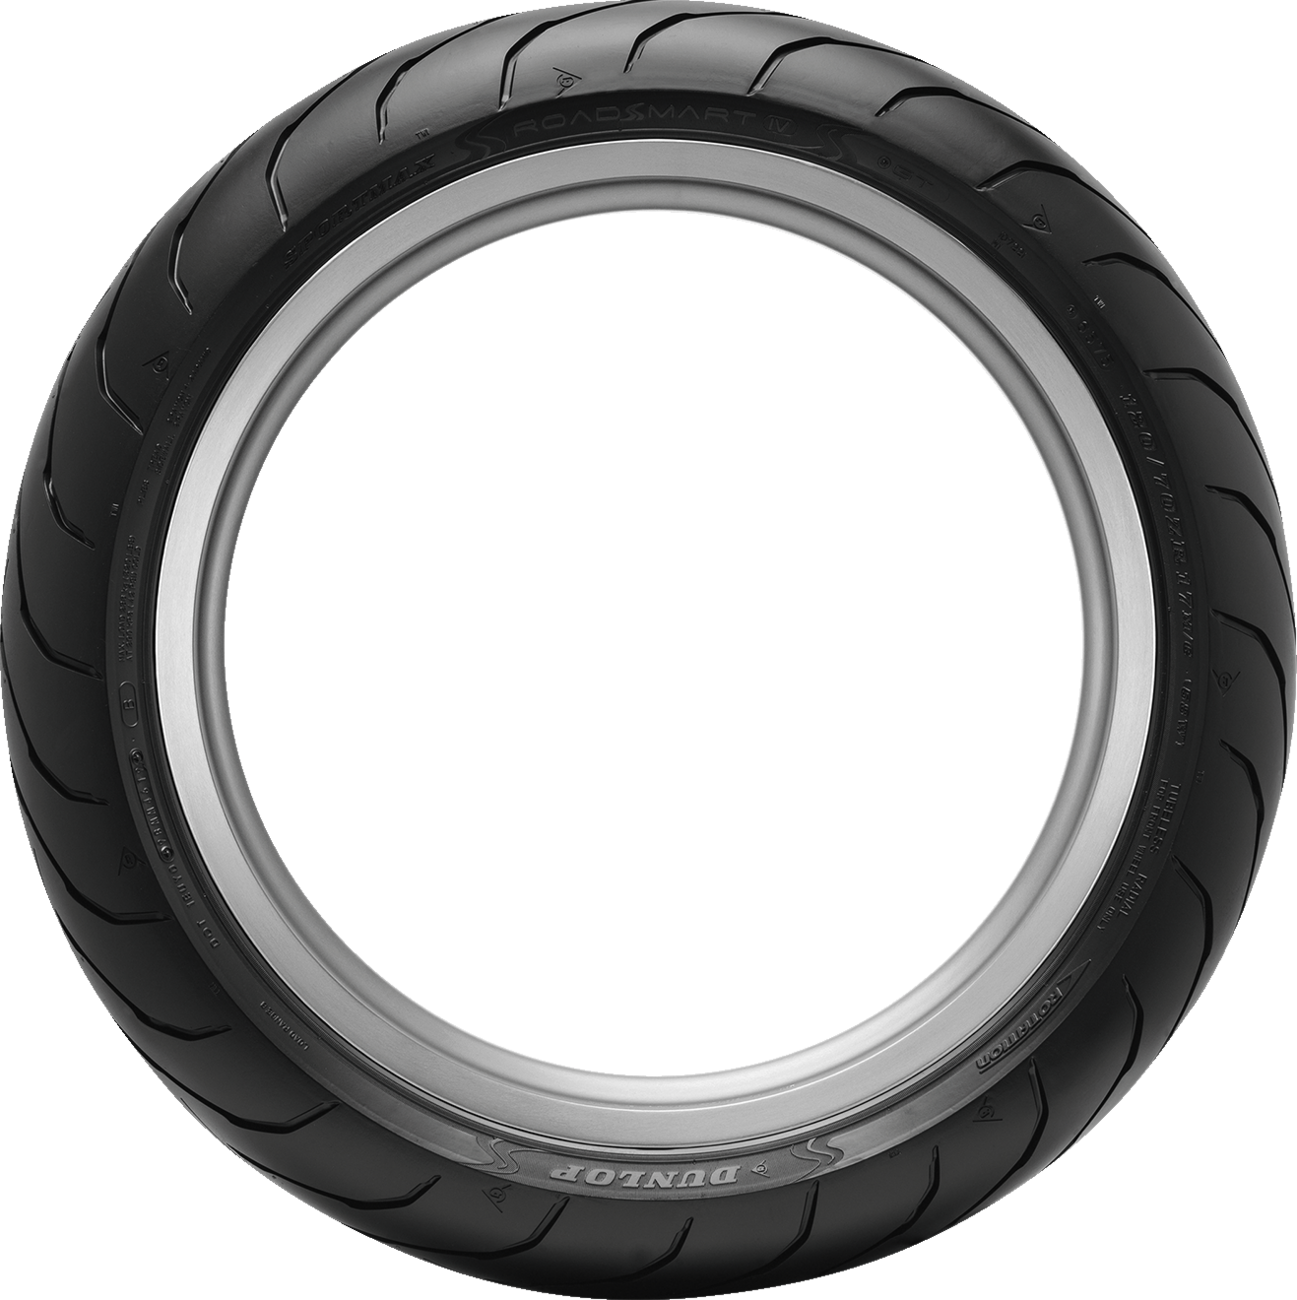 DUNLOP Tire - Sportmax® Roadsmart IV - Front - 120/70ZR19 45253308